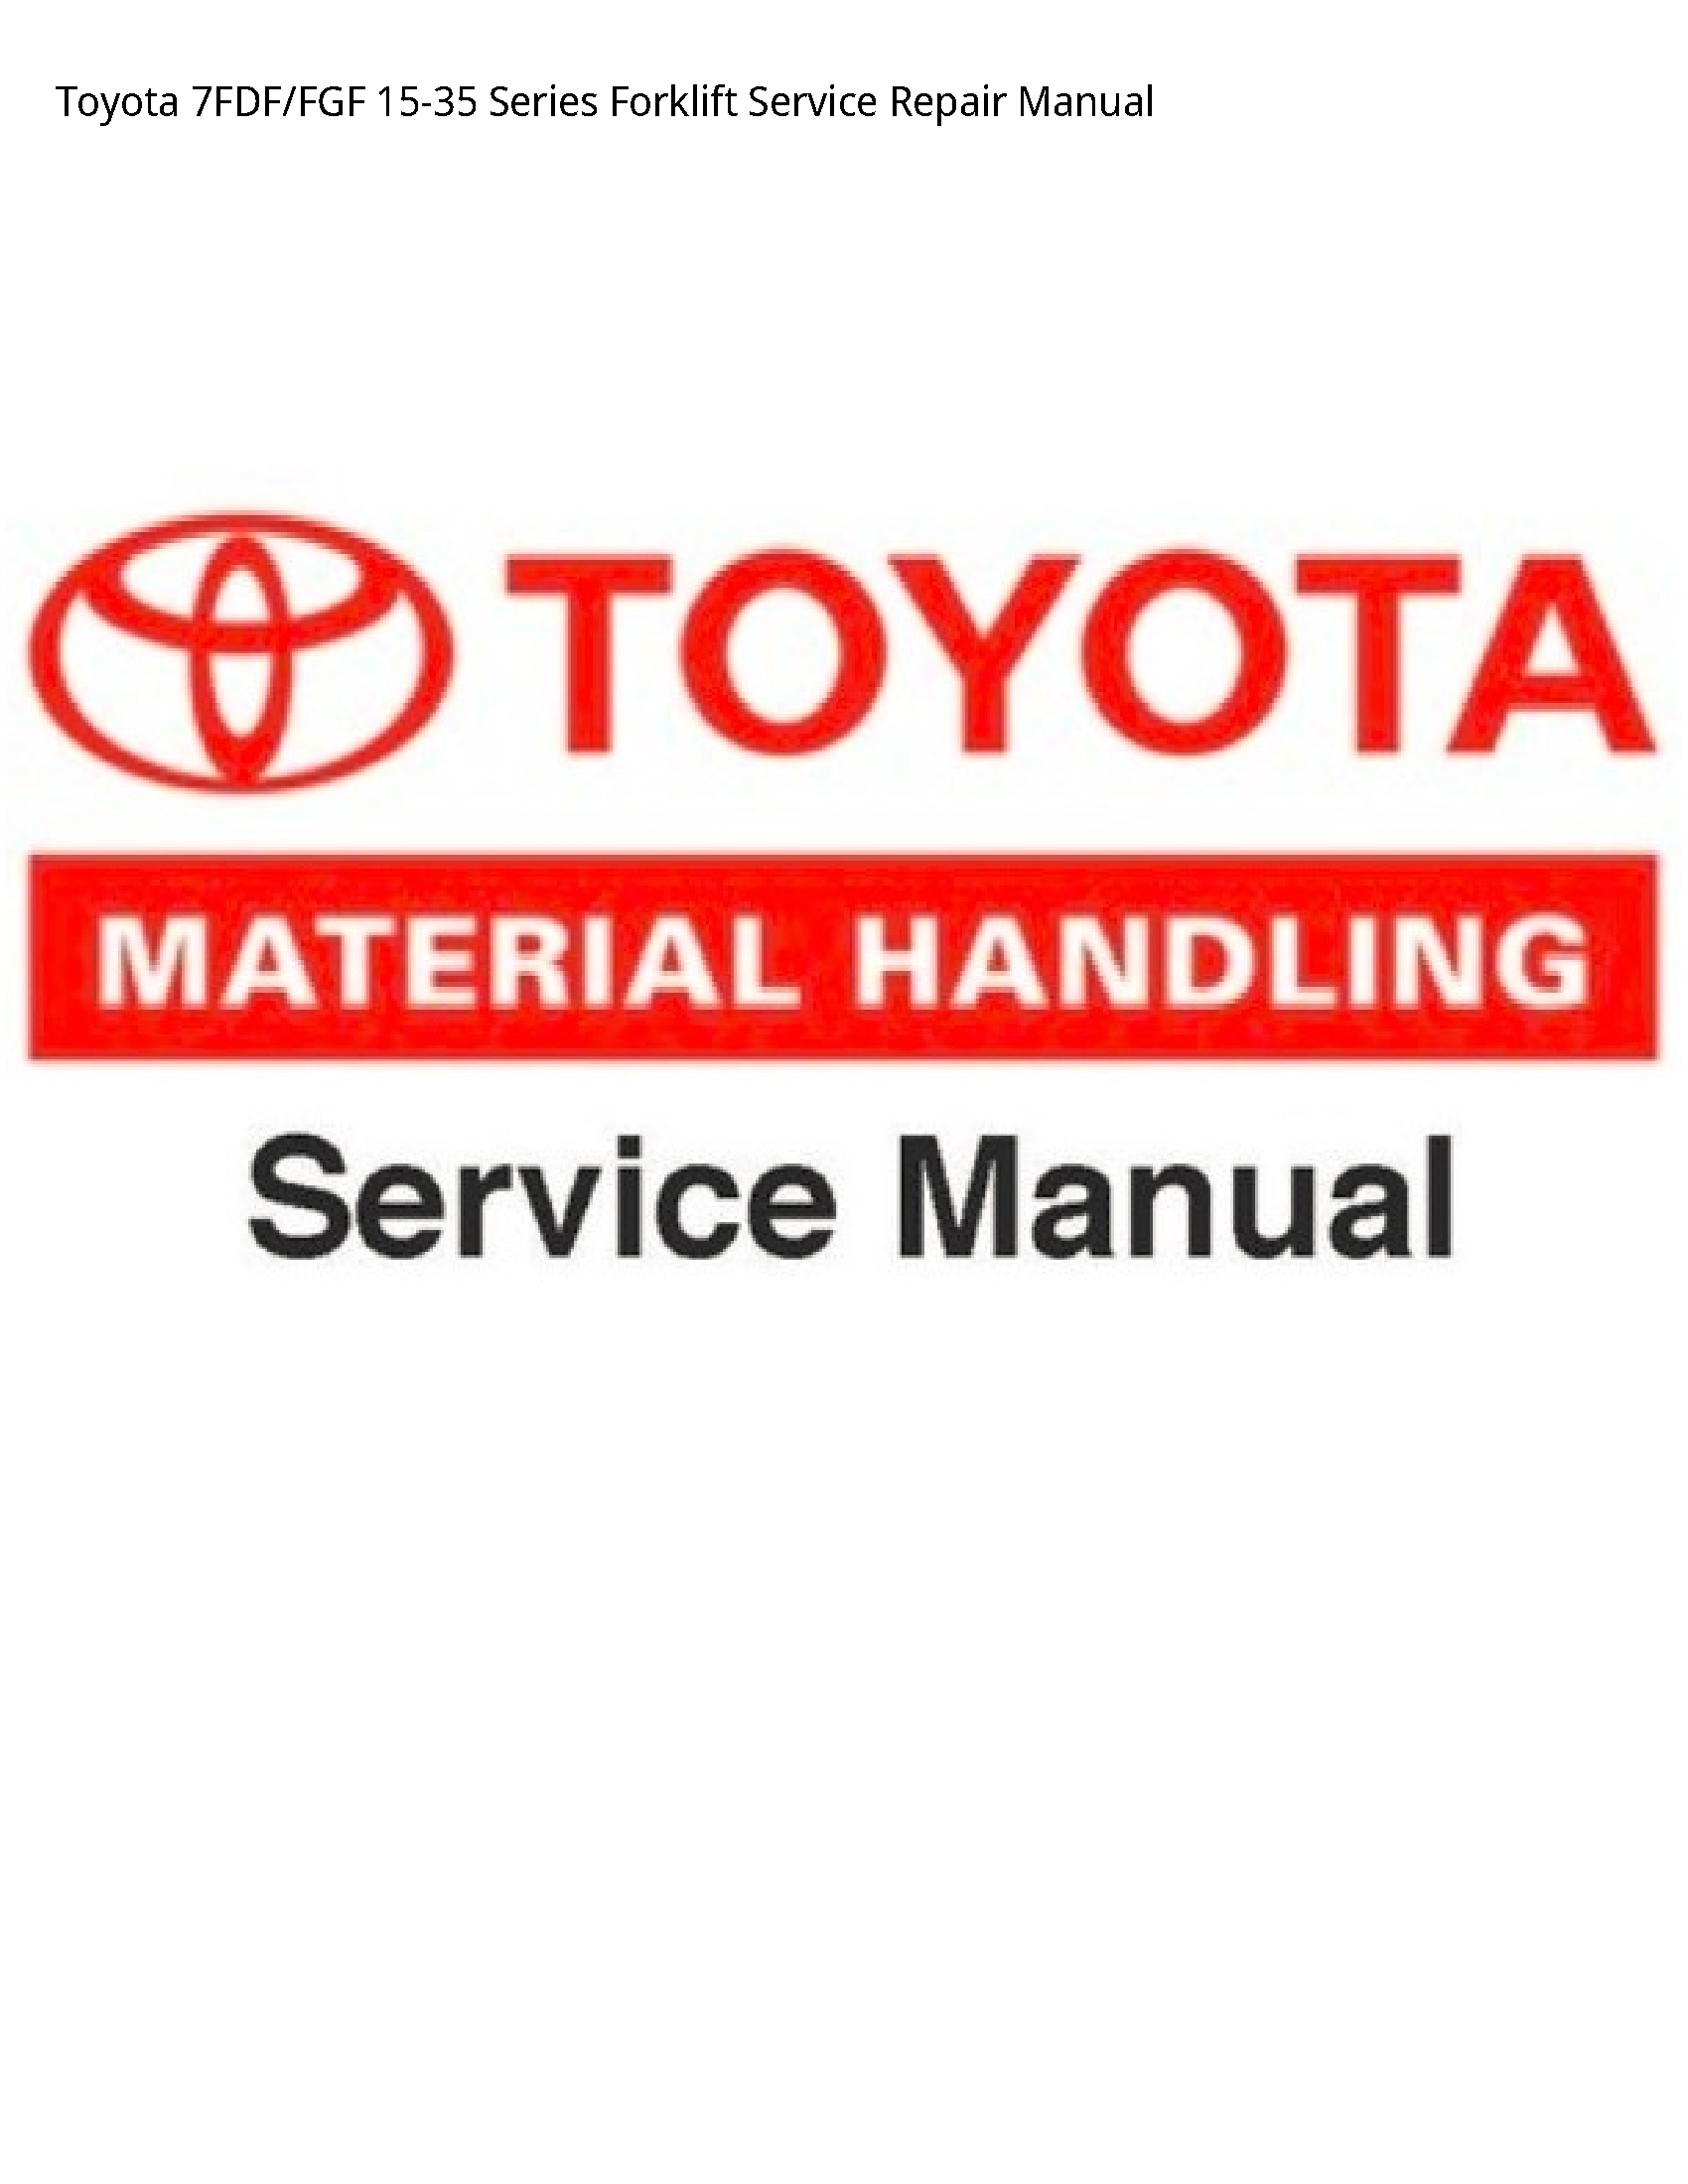 Toyota 7FDF Series Forklift manual